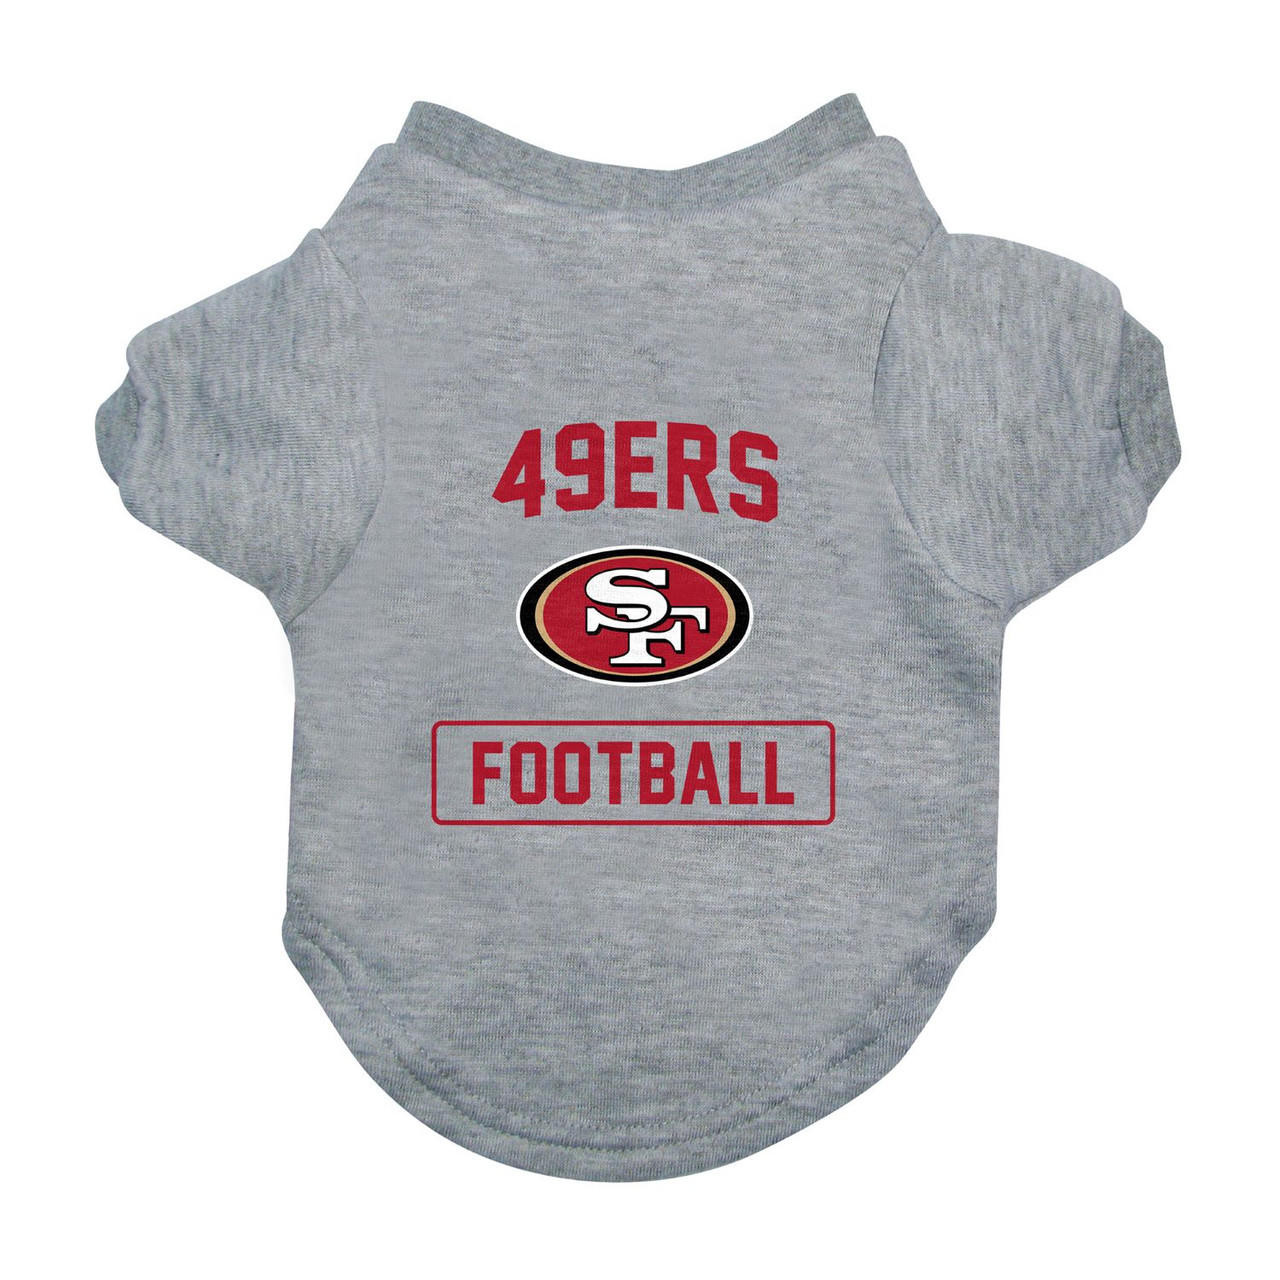 Little Earth 320150-49ER-S NFL Pet Tee Shirt Type San Francisco 49ers - Small